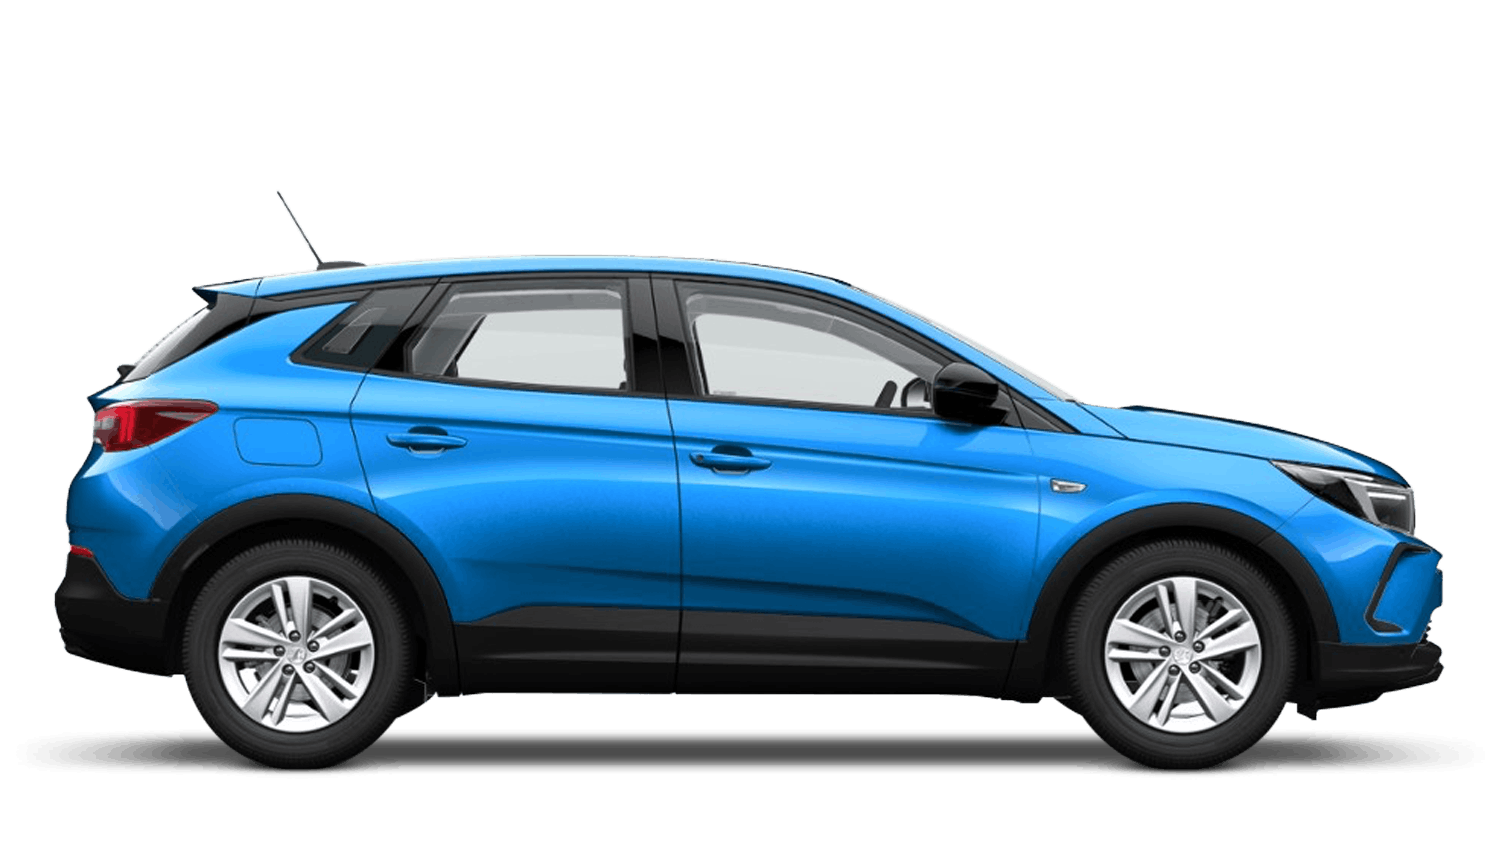 Cobalt Blue (Metallic) New Vauxhall Grandland